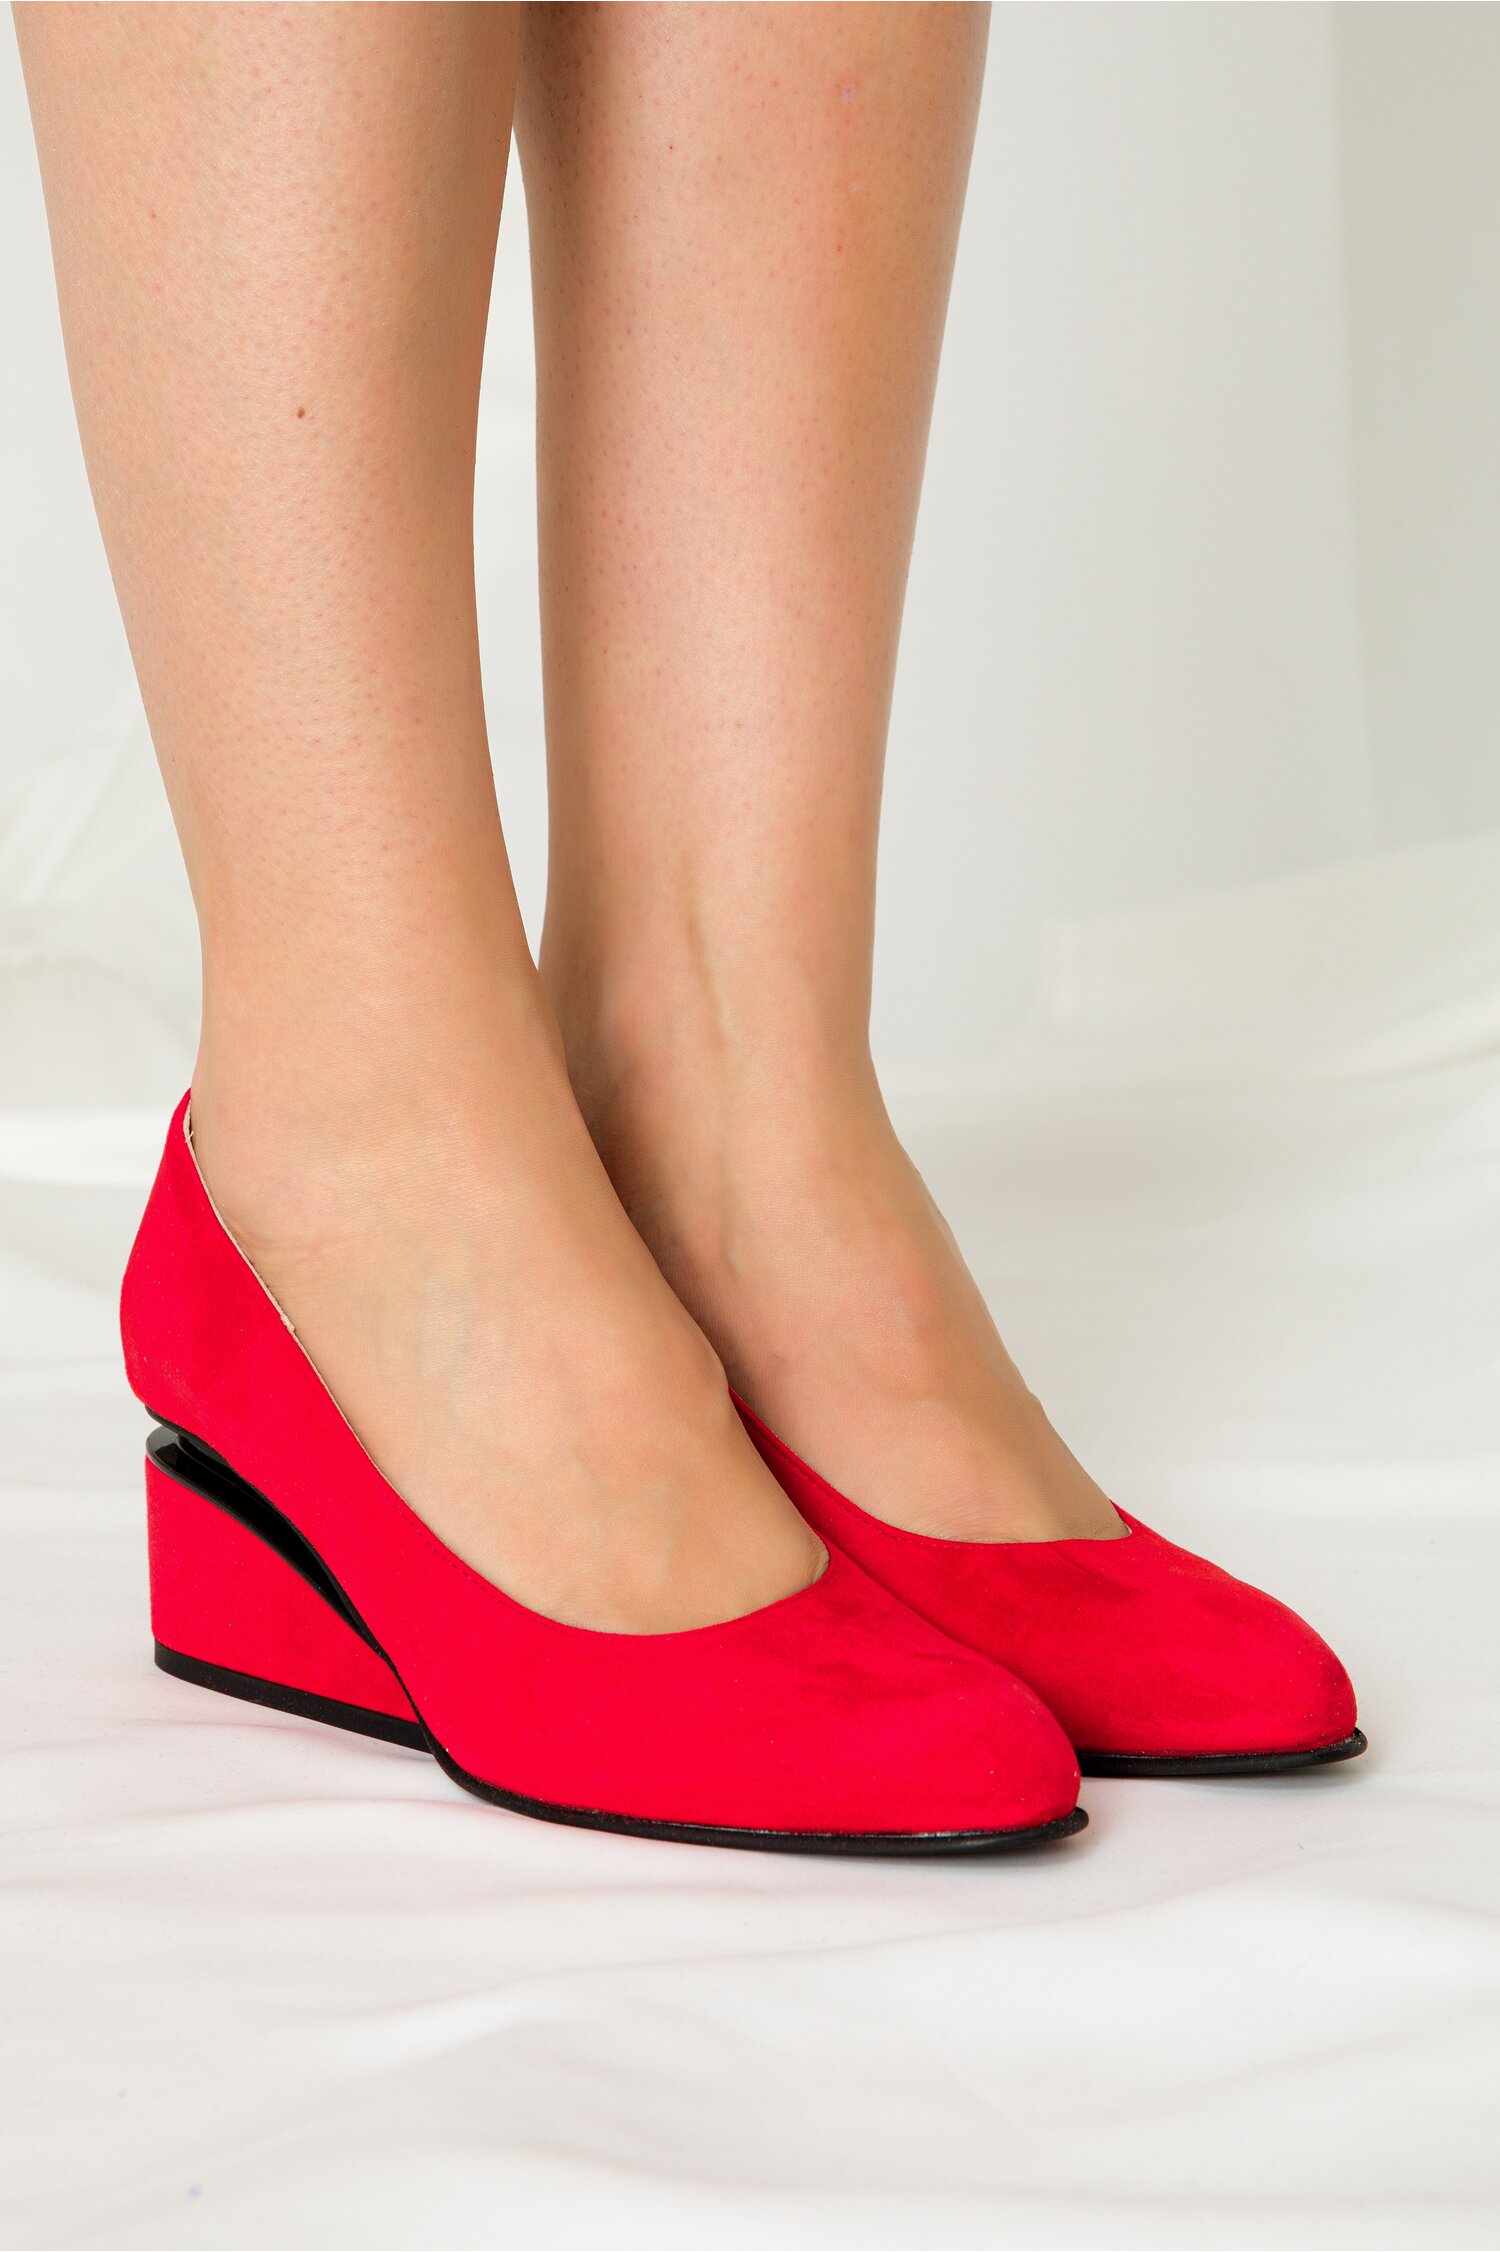 Pantofi rosii cu toc futurist din piele intoarsa dyfashion.ro imagine megaplaza.ro